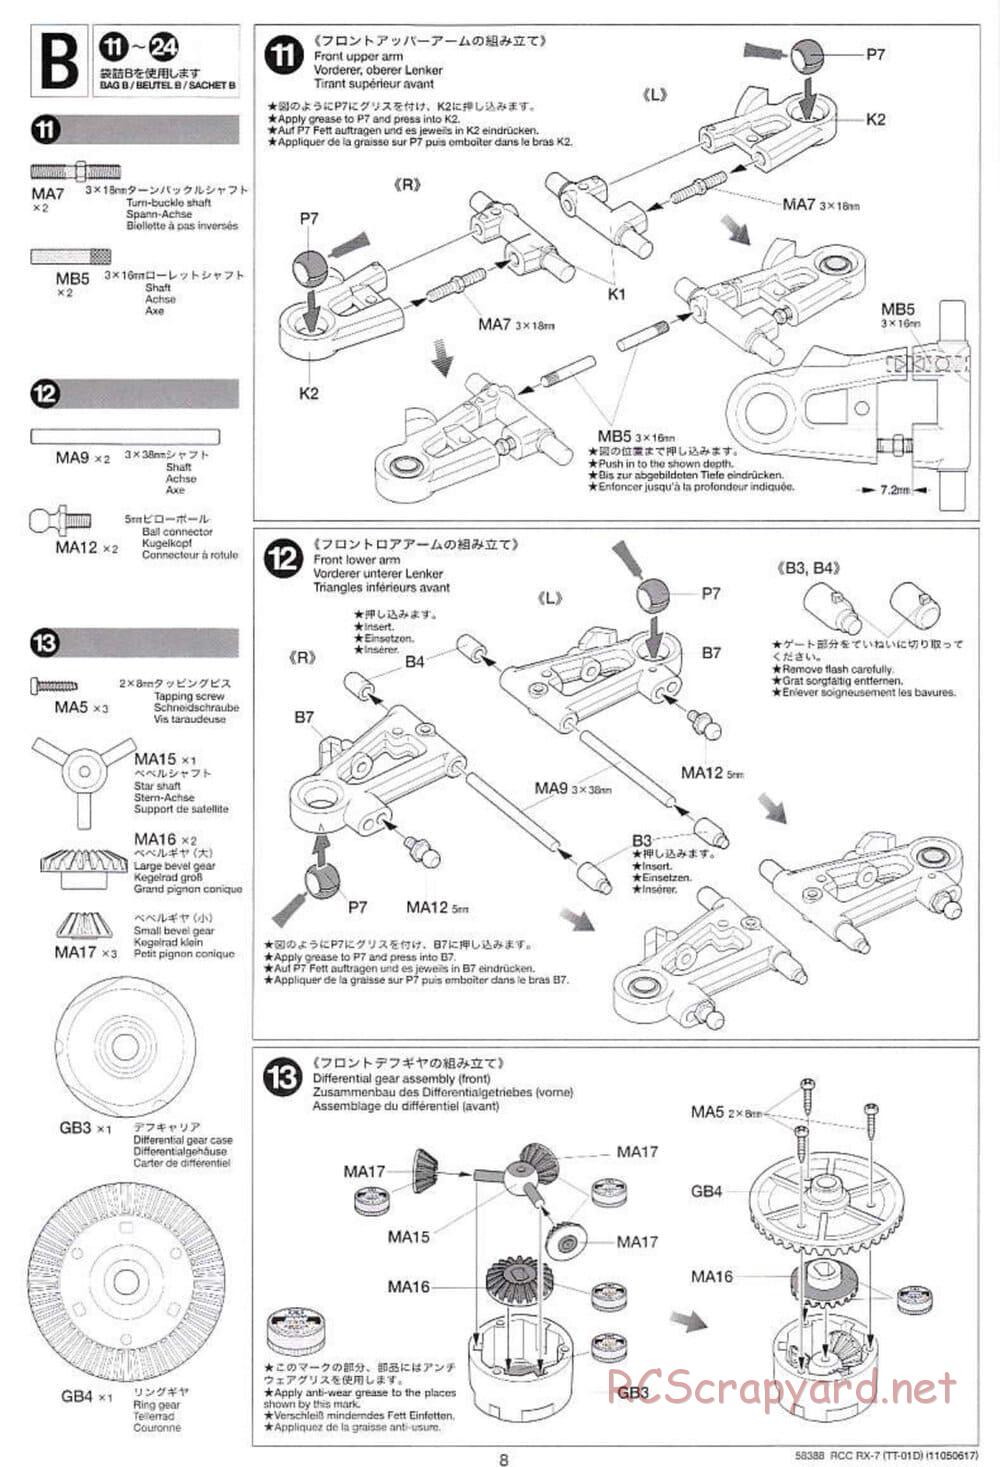 Tamiya - Mazda RX-7 - Drift Spec - TT-01D Chassis - Manual - Page 8